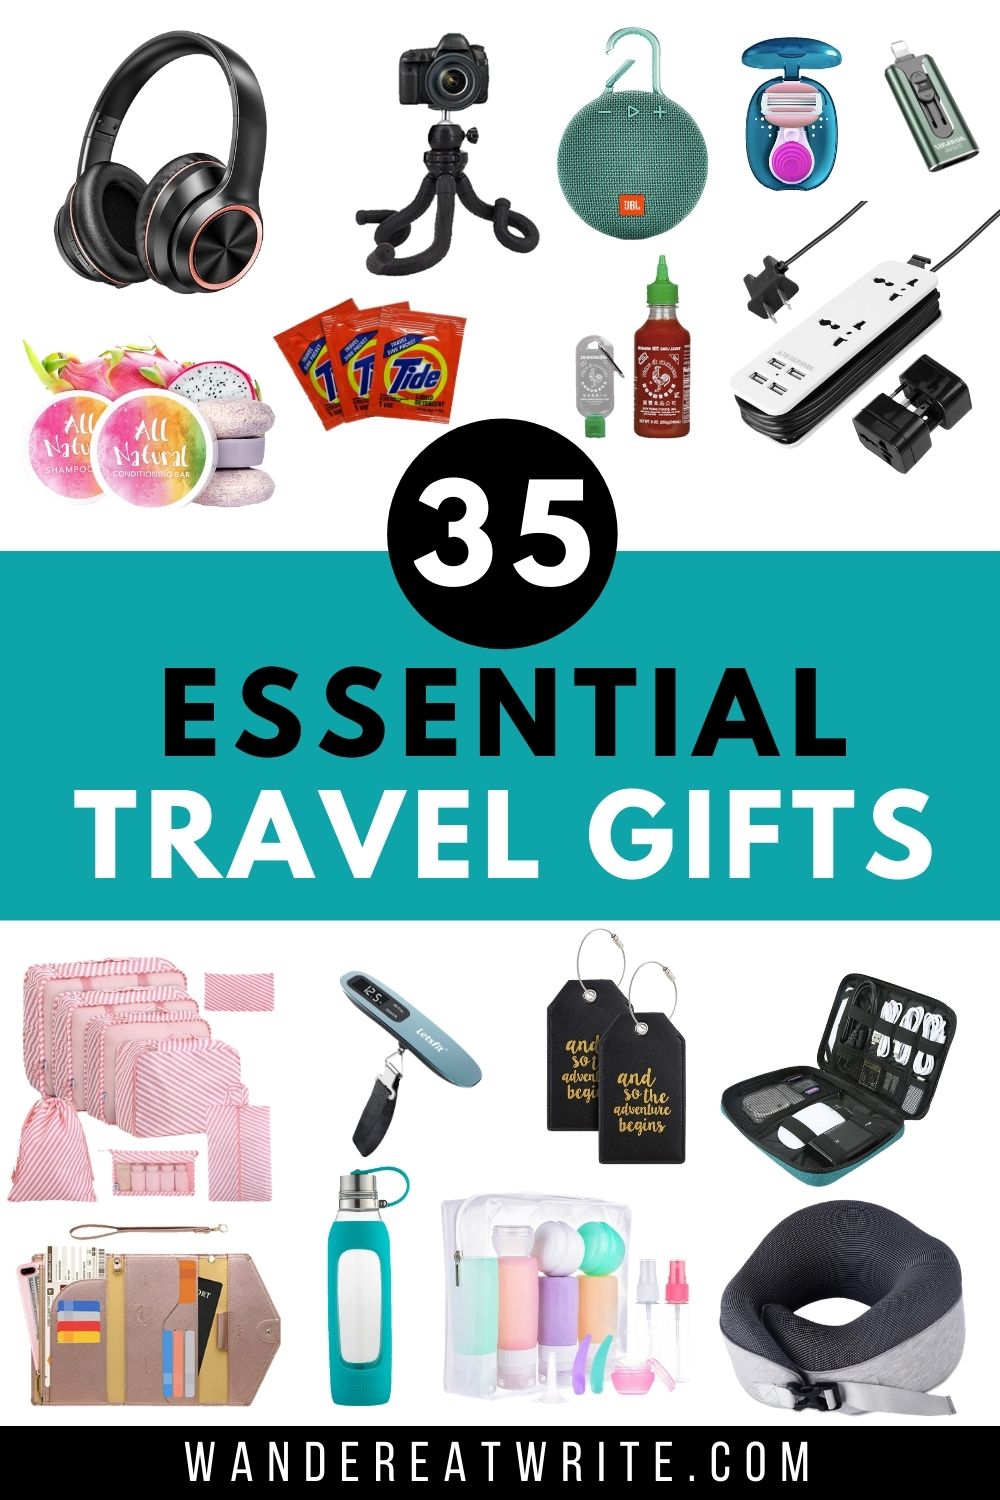 https://wandereatwrite.com/usheeche/2020/11/top-35-essential-travel-gifts-for-every-budget-pins.jpg